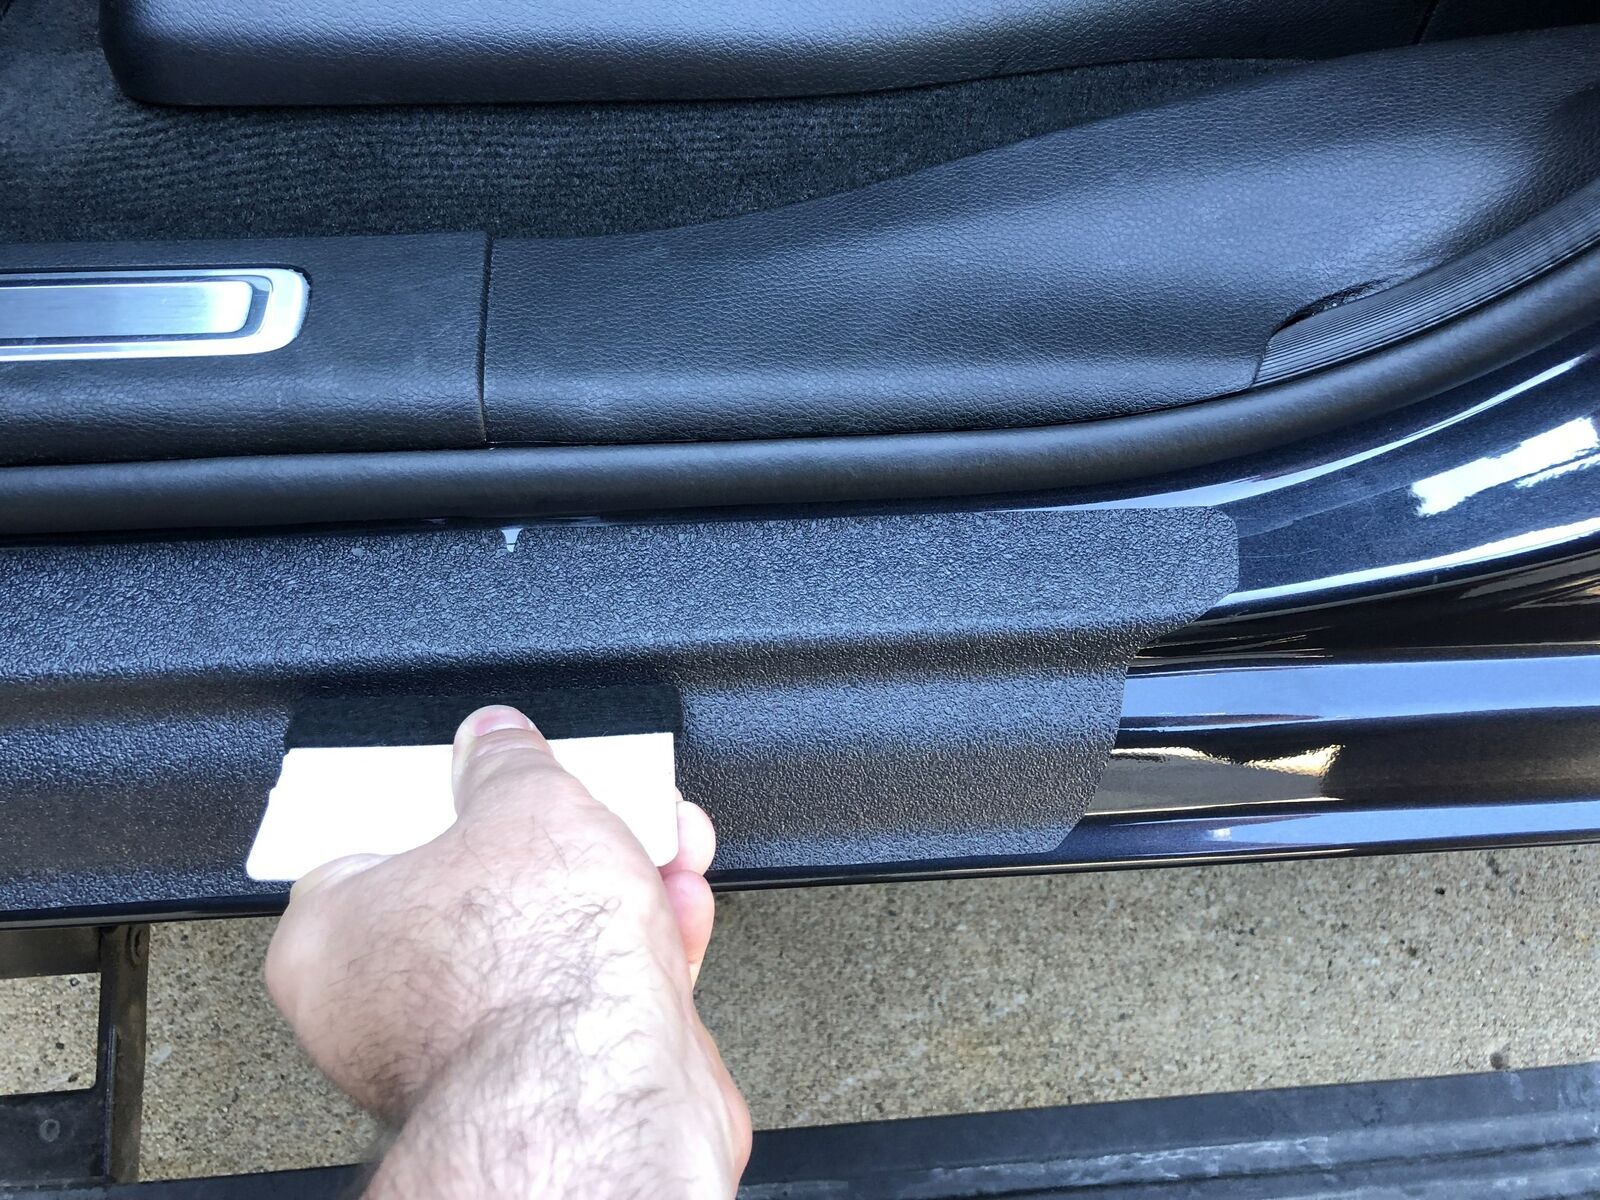 2019-2020 Fits Dodge Ram Crew Cab 6pc Door Threshold Step Shield Guard